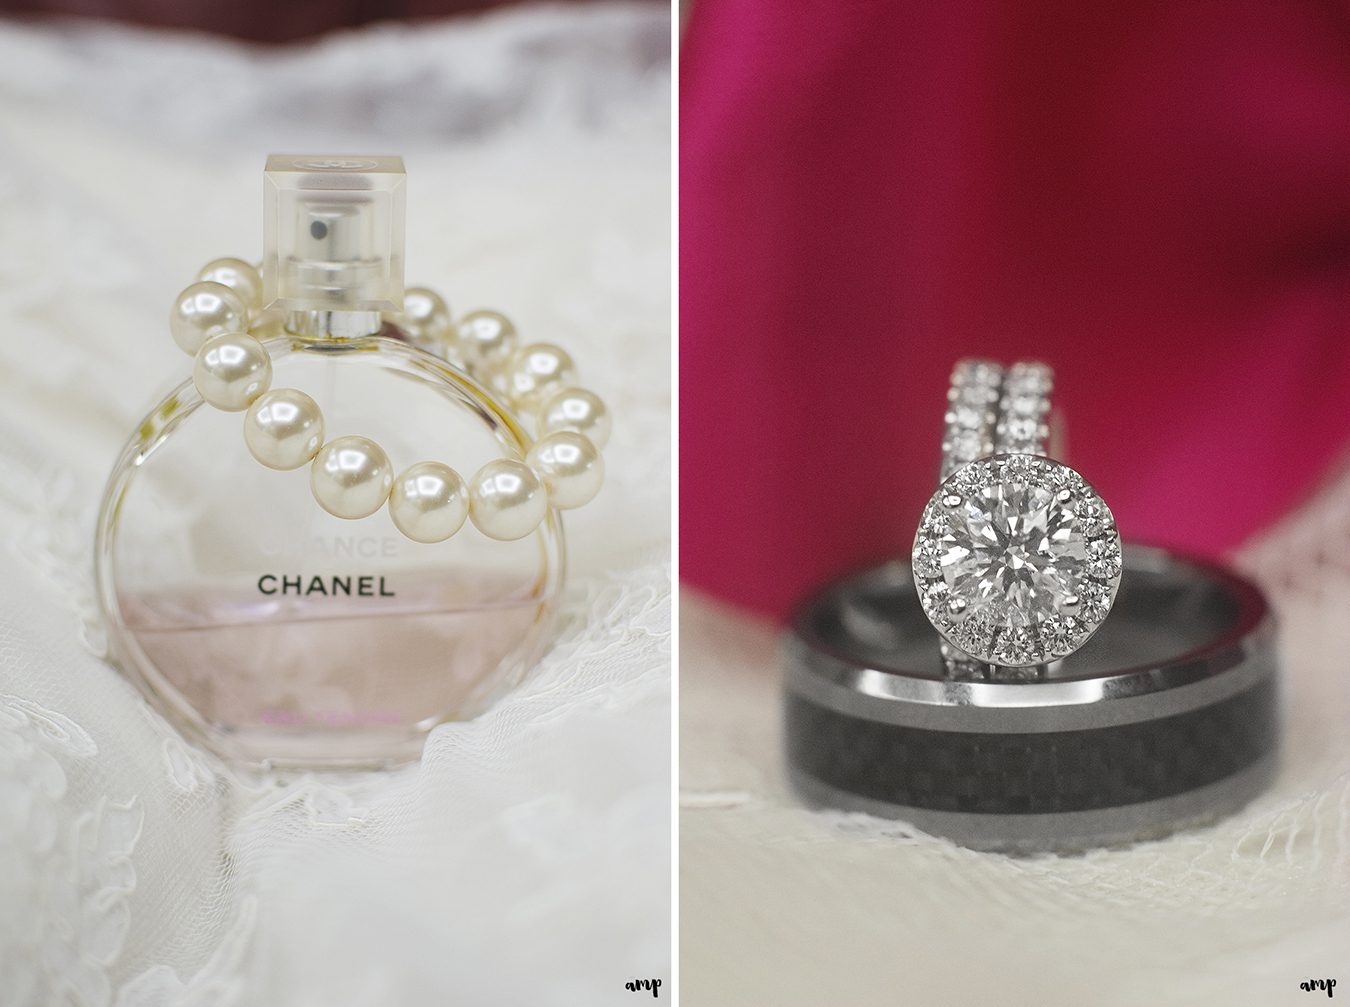 Chanel perfume and wedding rings